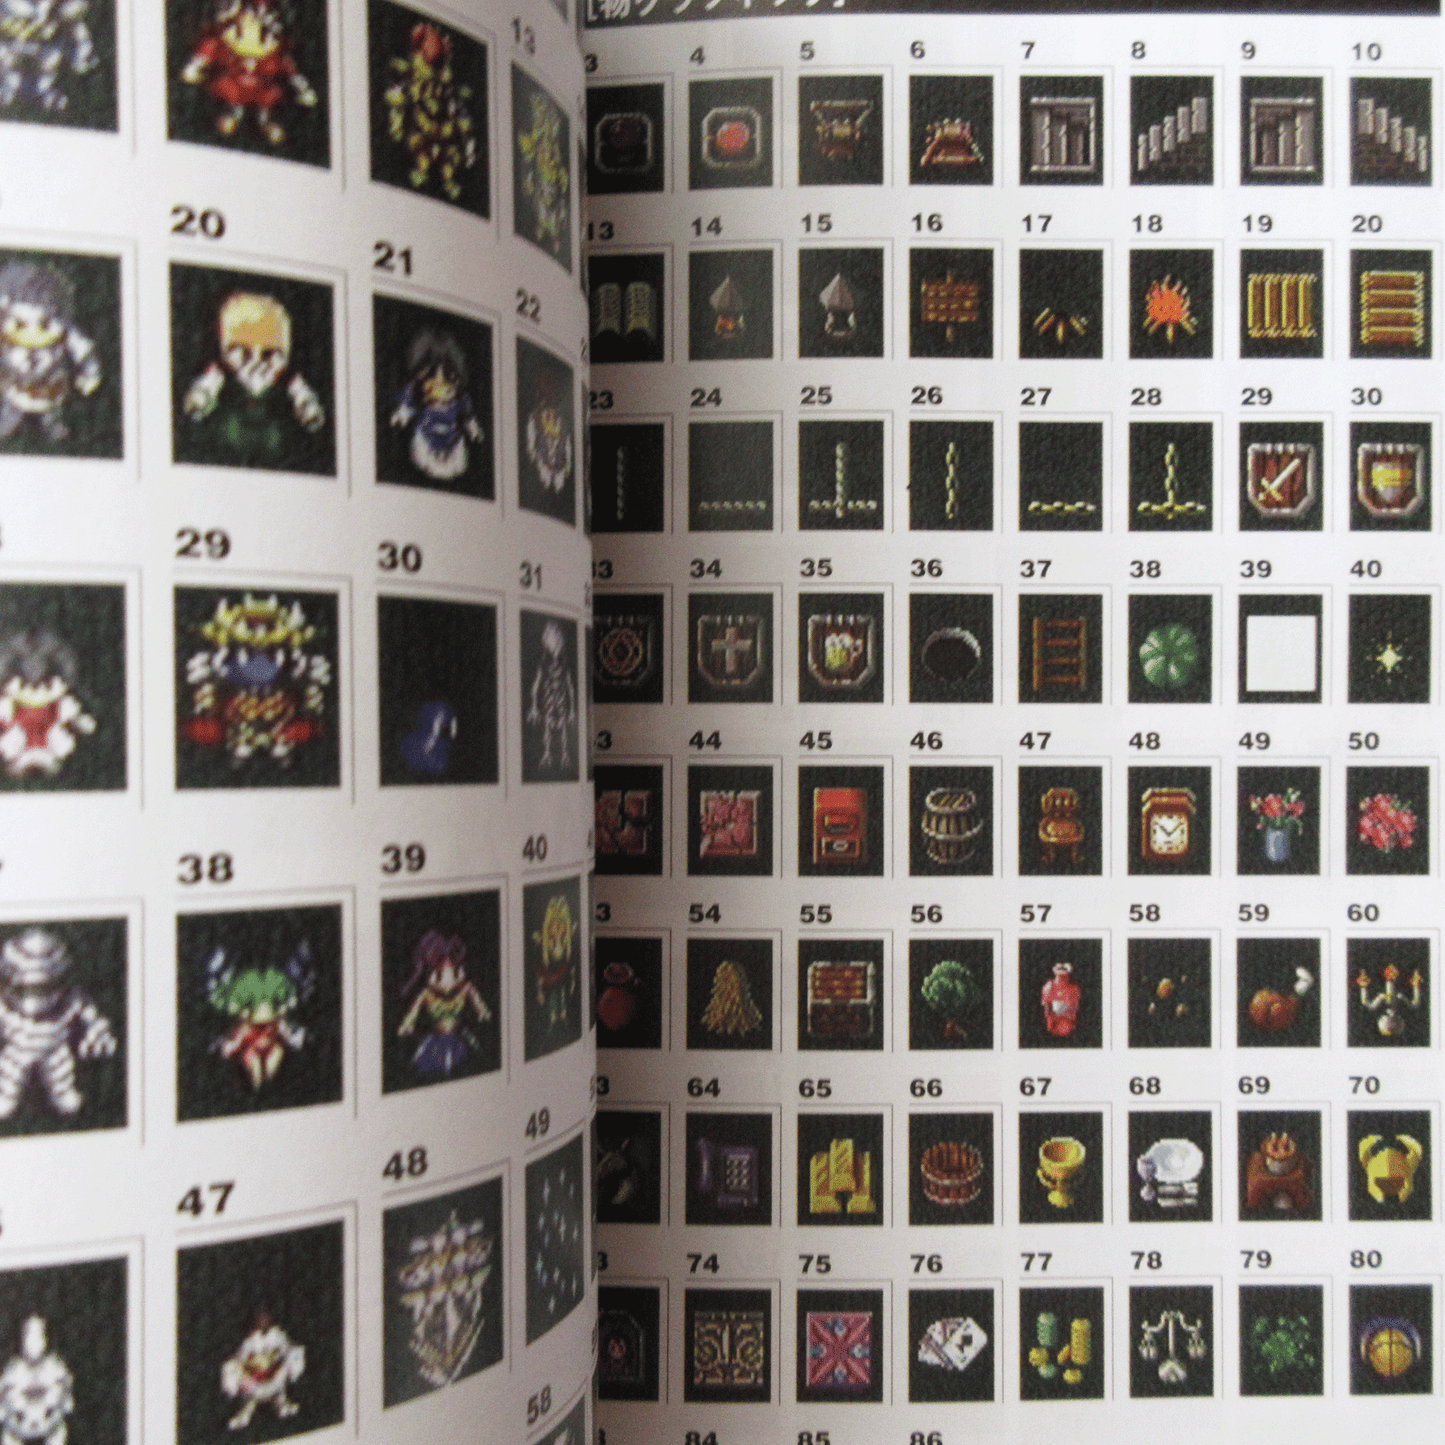 RPG Maker 3 (RPG Tsukuru) Official Guide Book